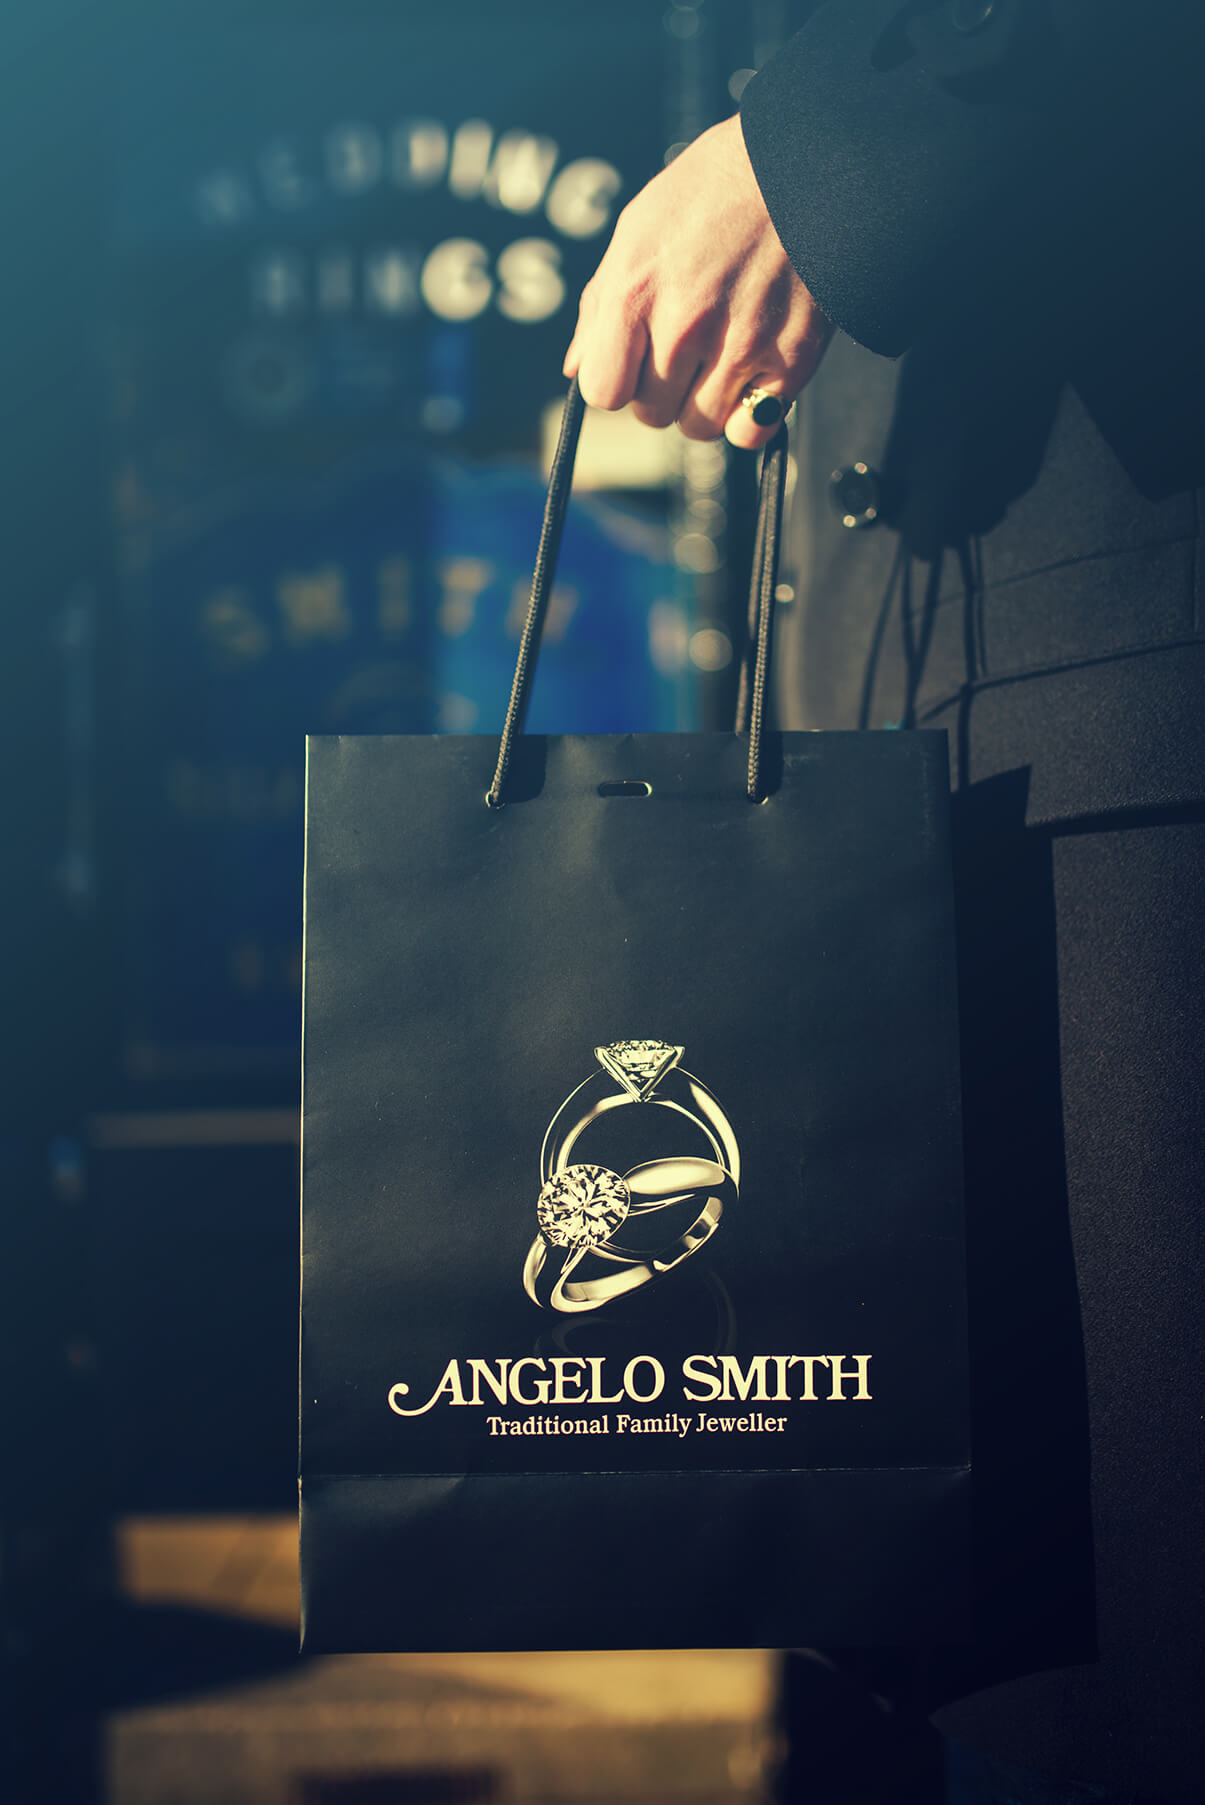 An Angelo Smith carrier bag